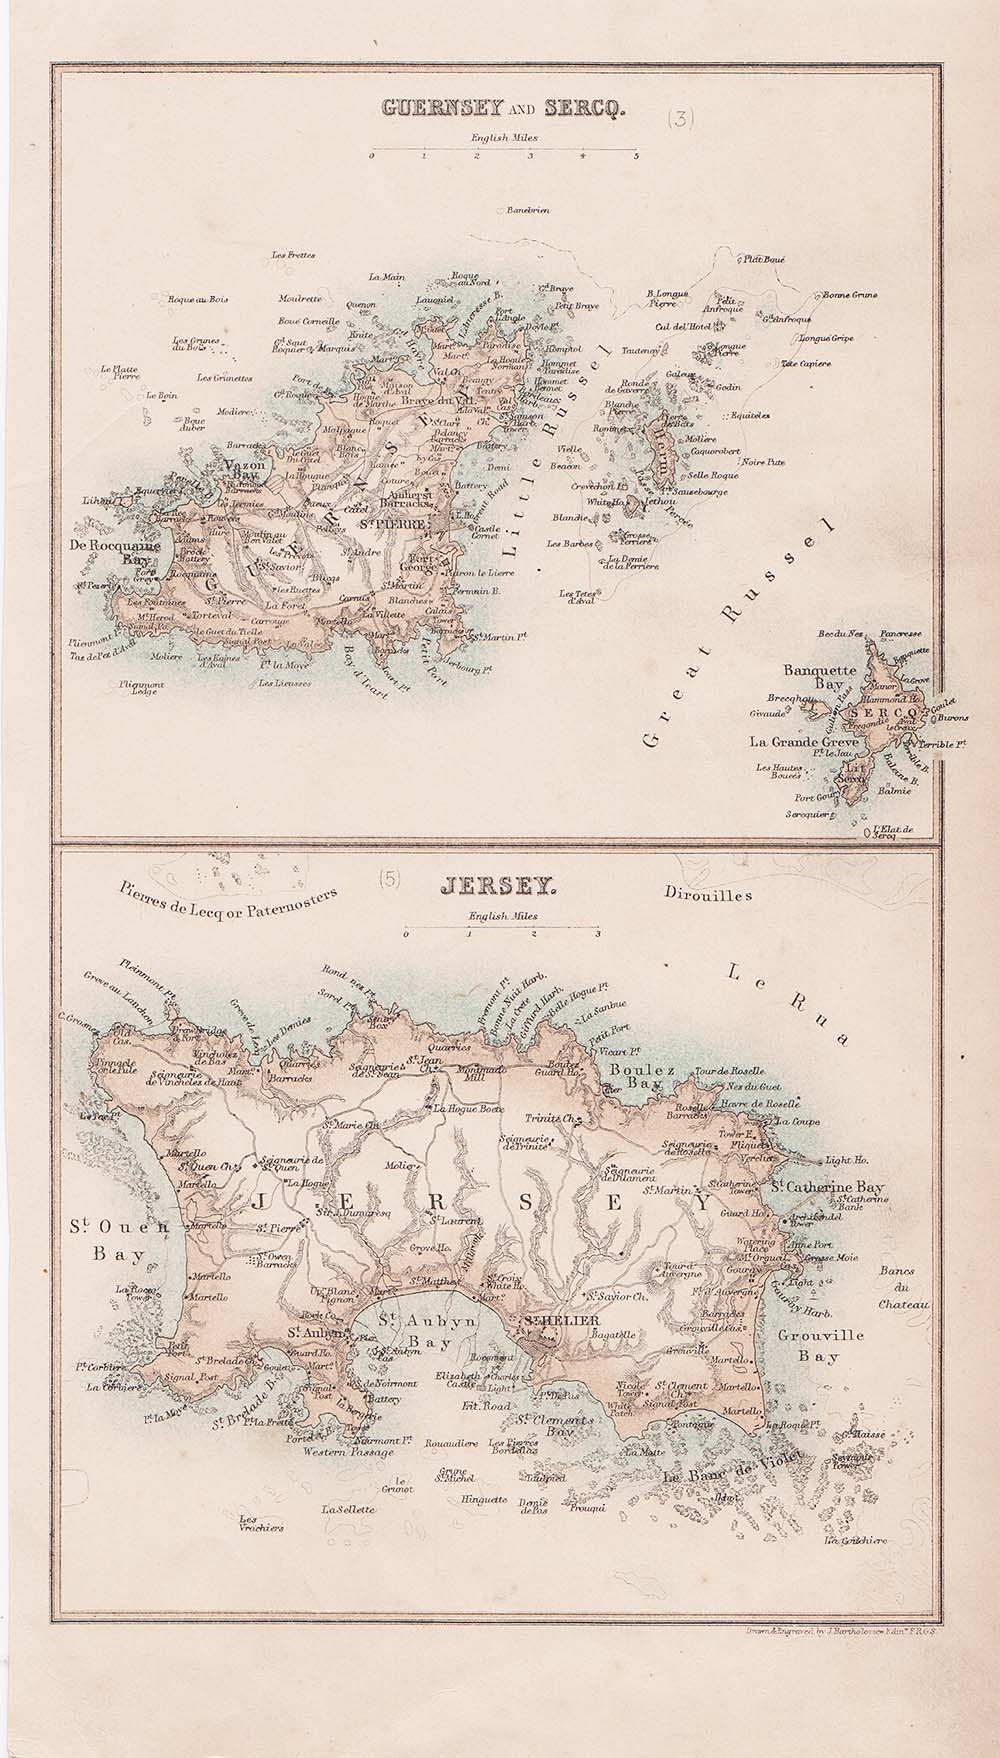 Guernsey and Sercq  Jersey